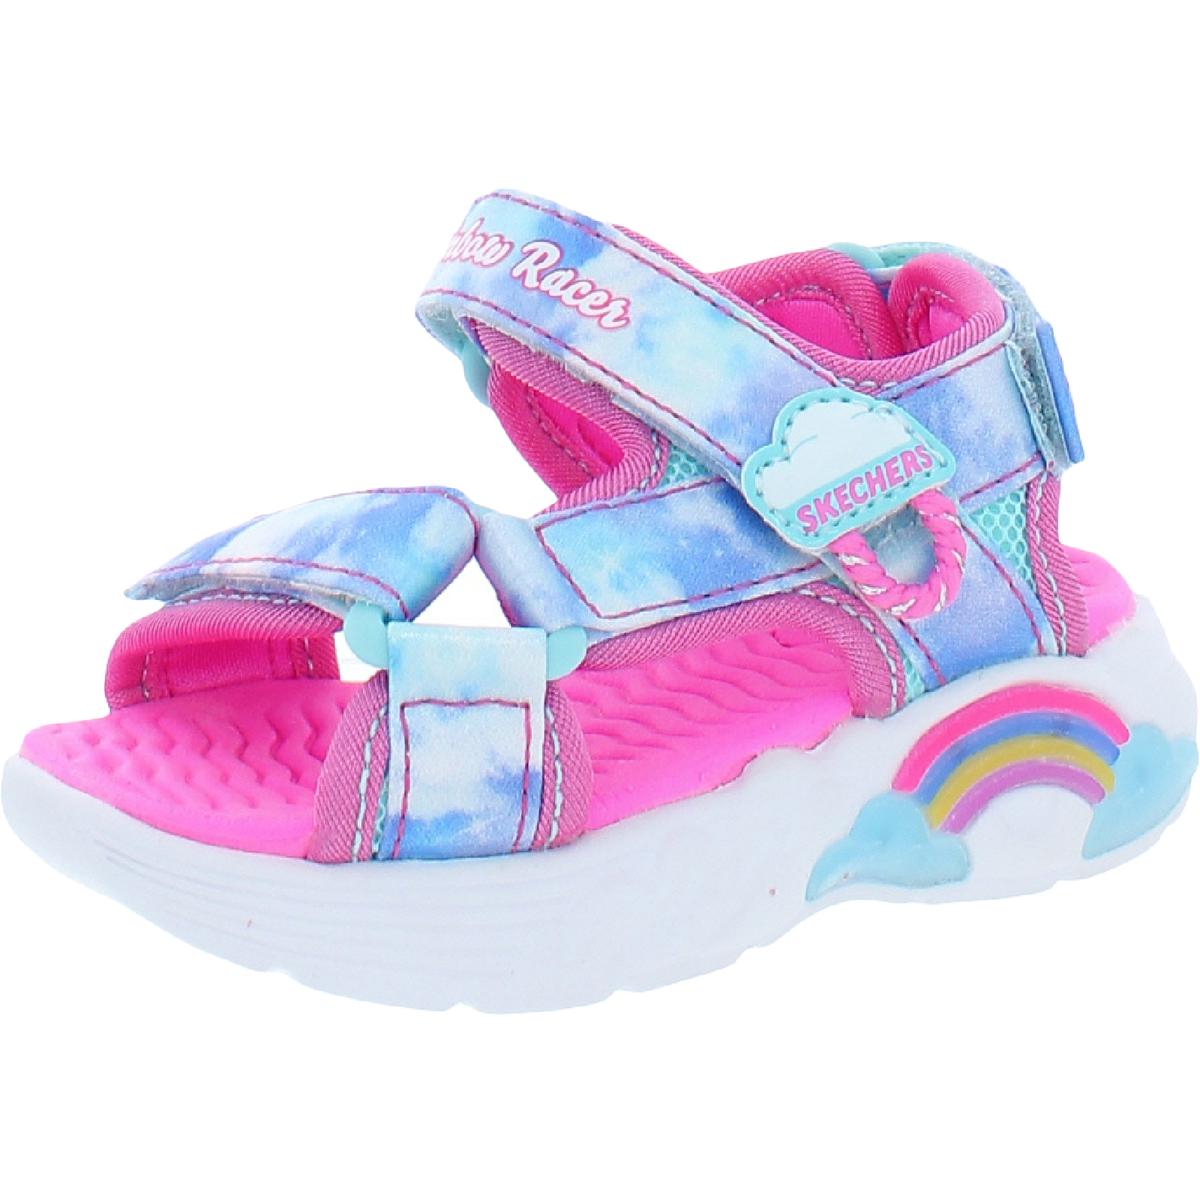 Skechers Summer Sky Girls Charmeuse Tie-Dye Light-Up Shoes